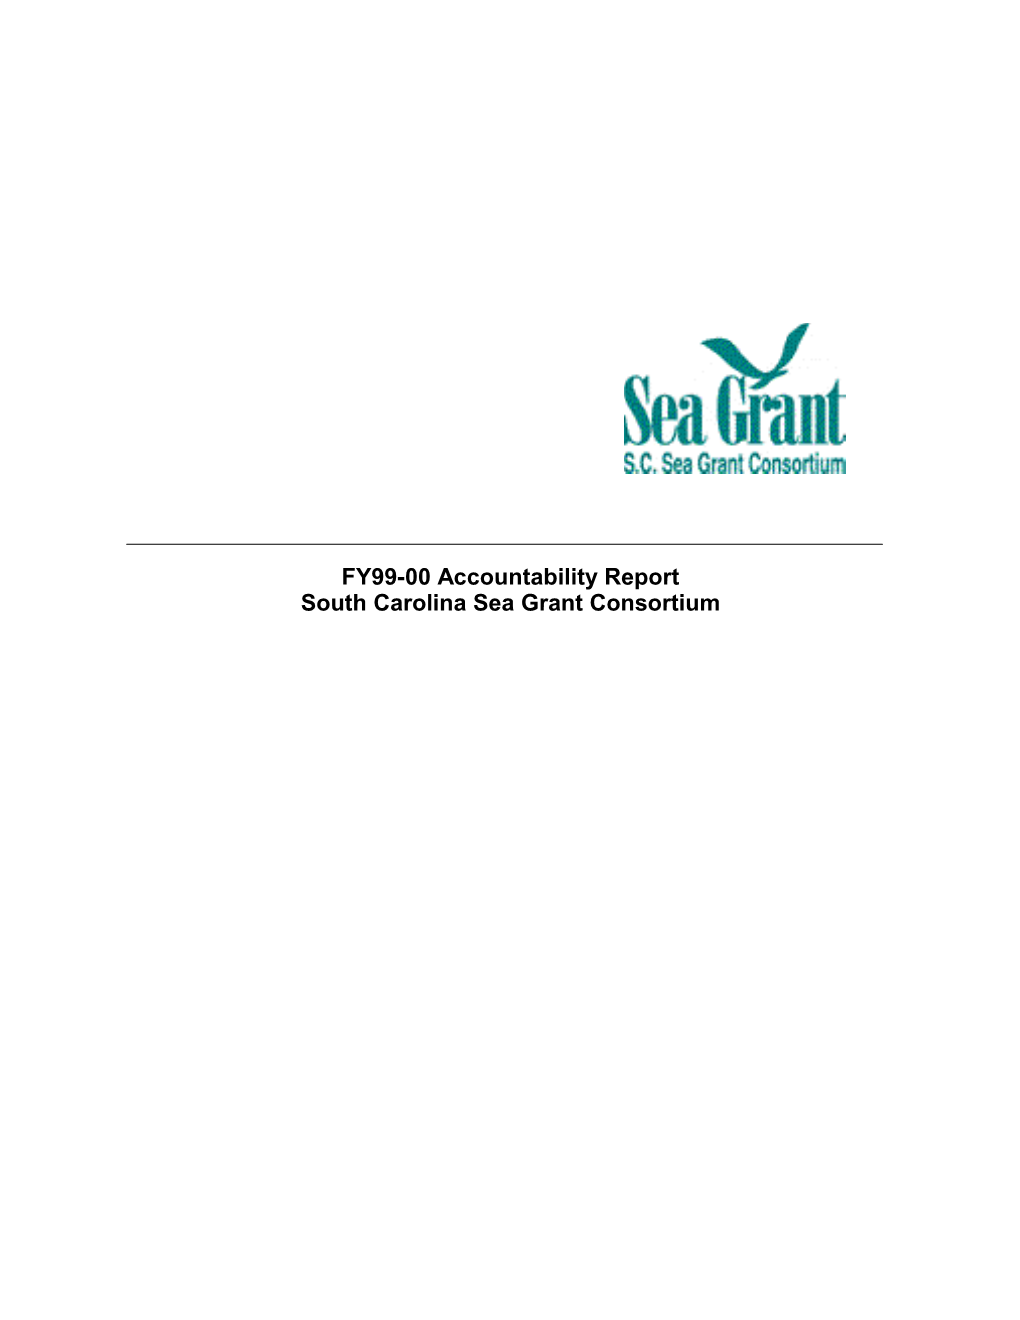 South Carolina Sea Grant Consortium